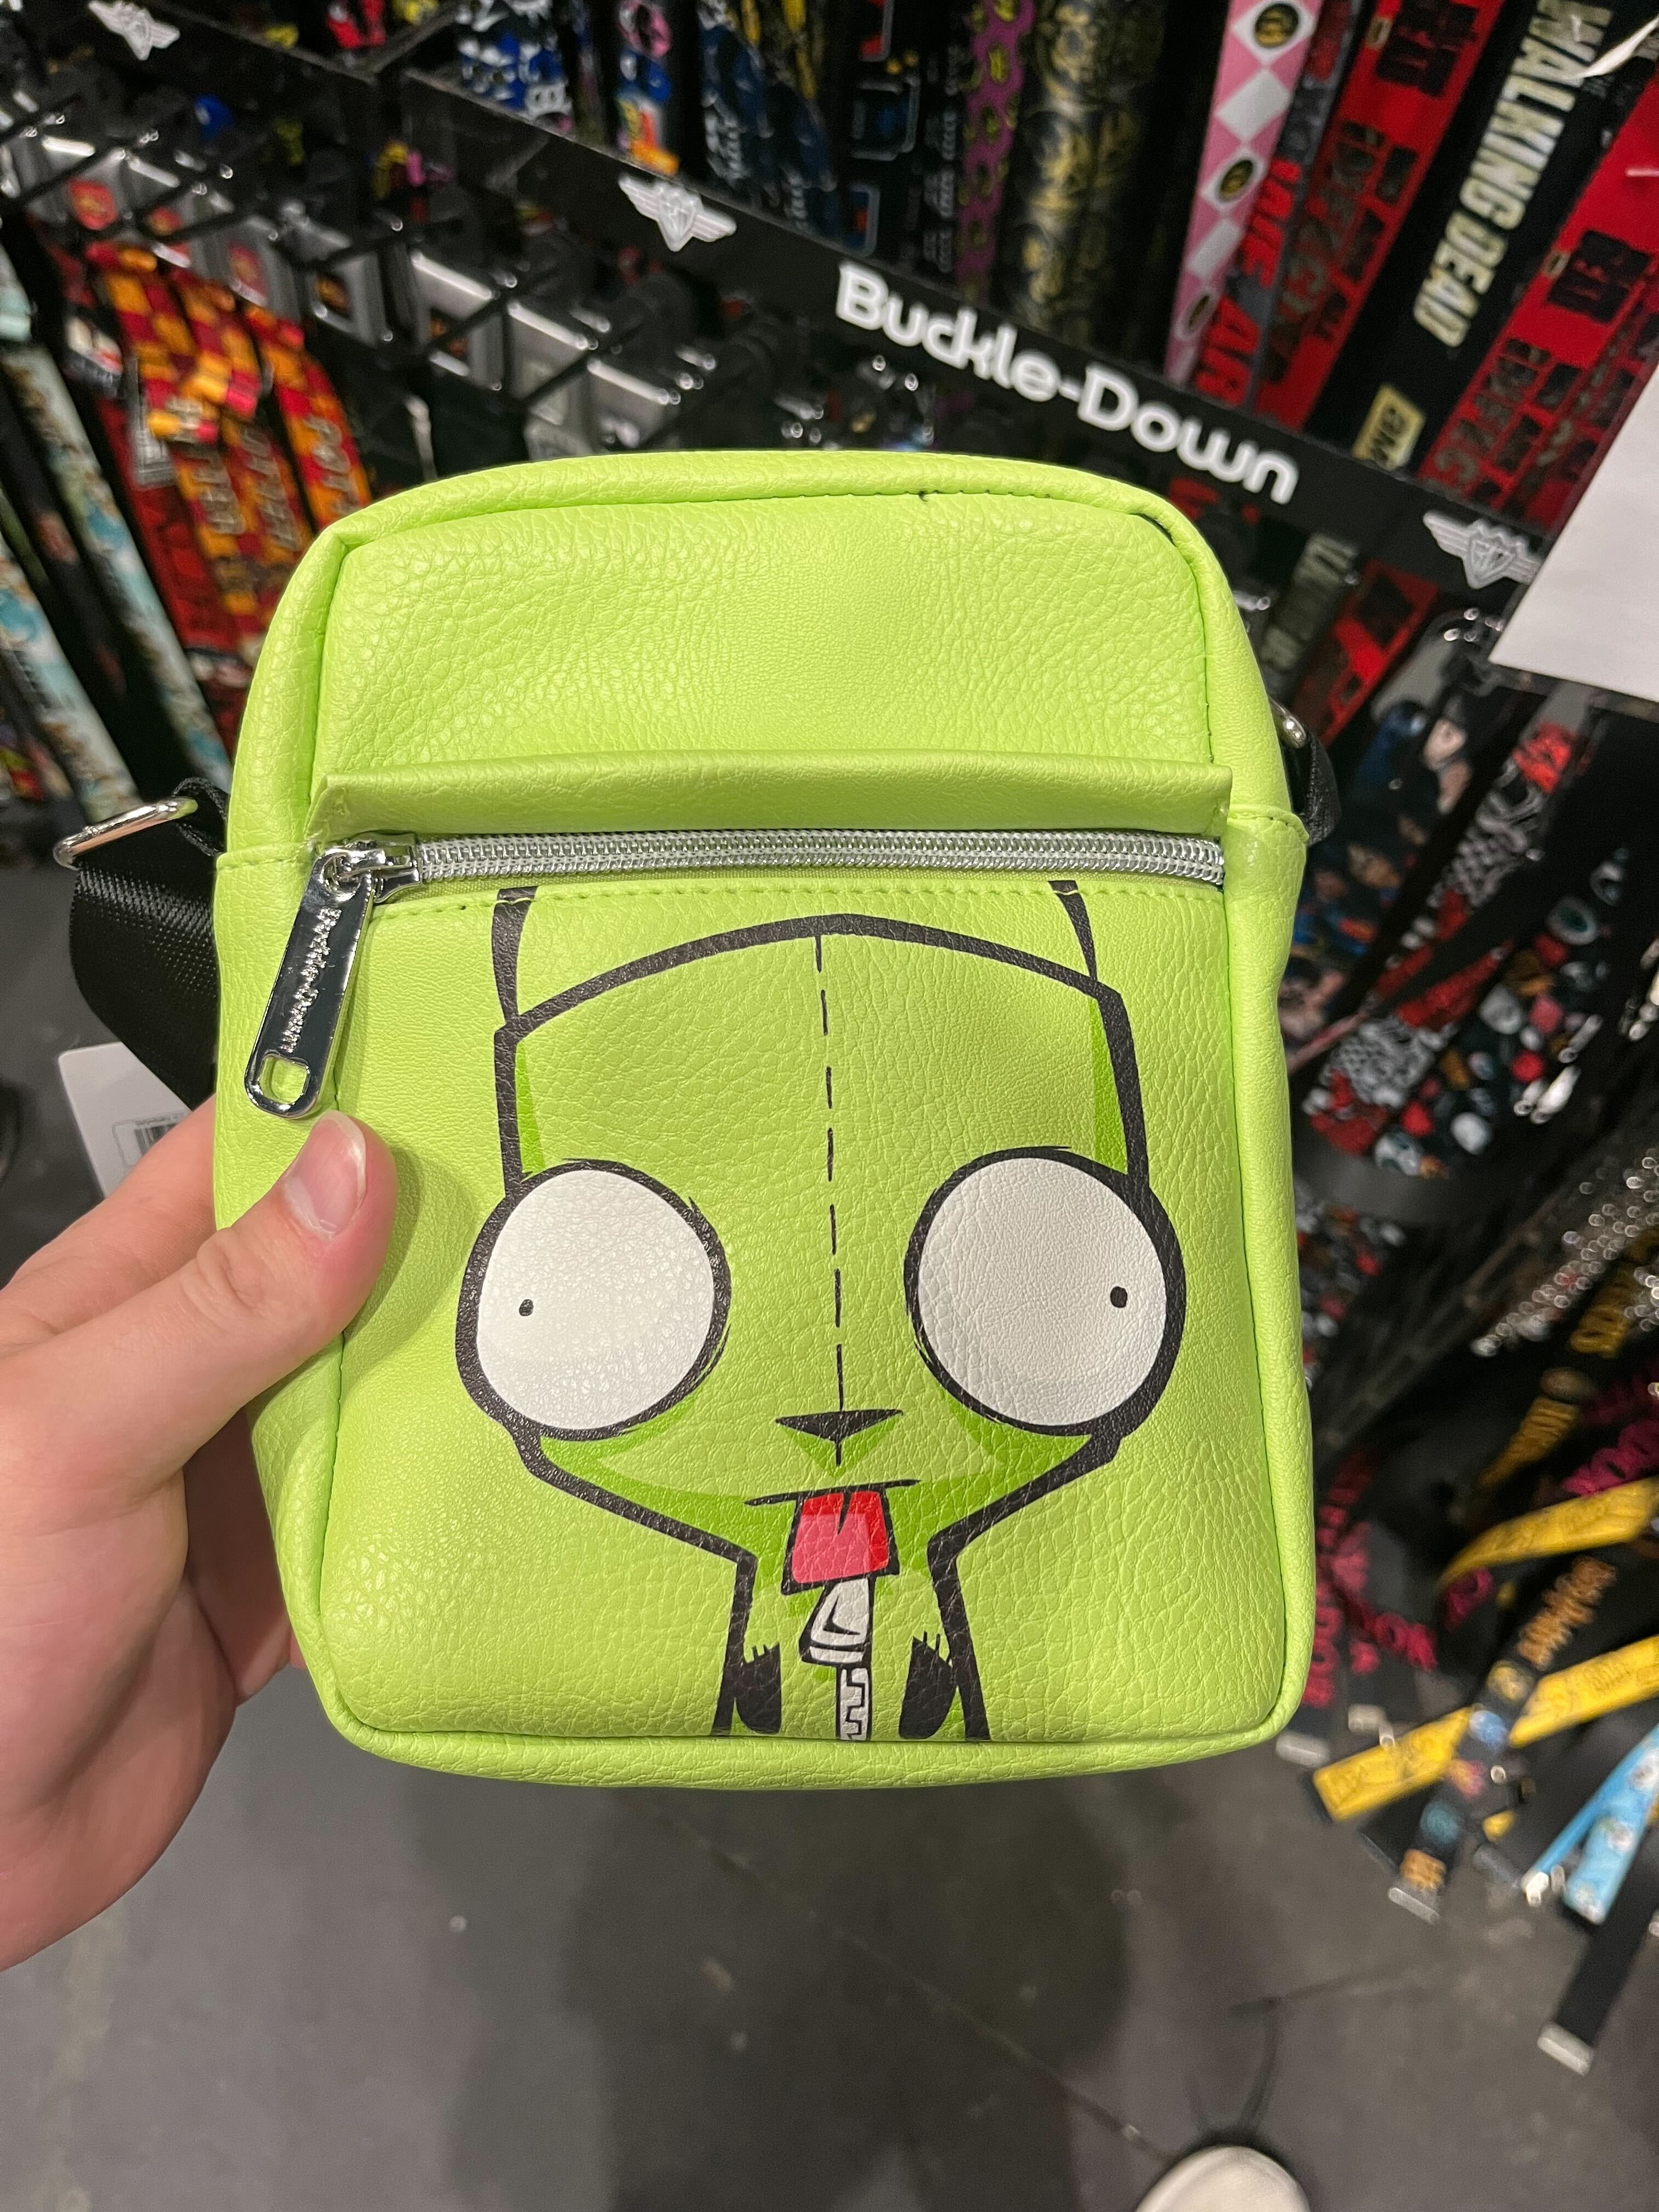 This strange zombie purse. 